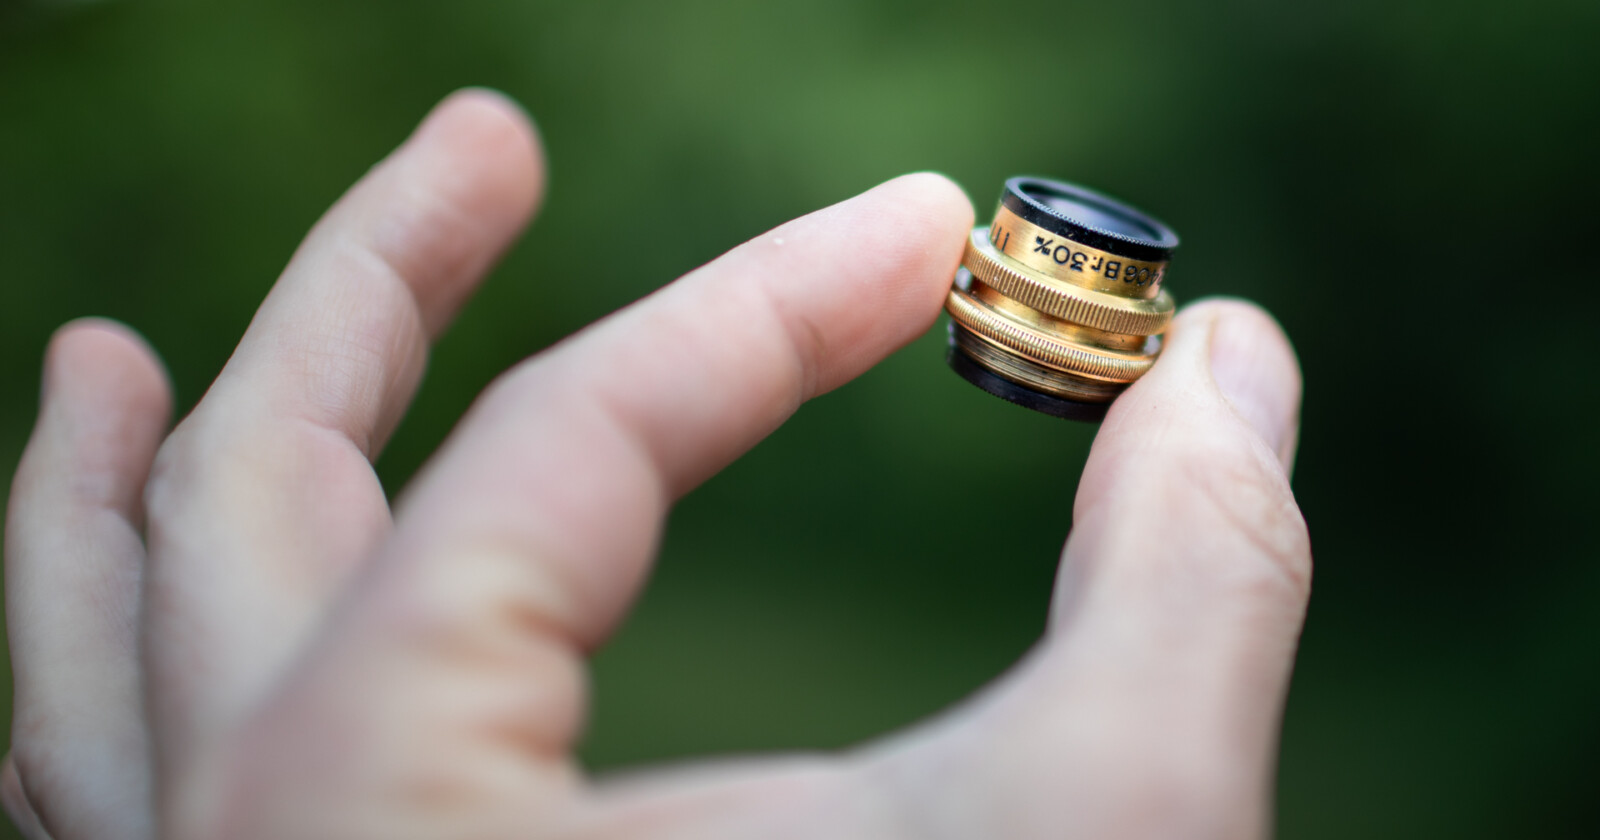  tiny lens creates huge headaches wet plate 